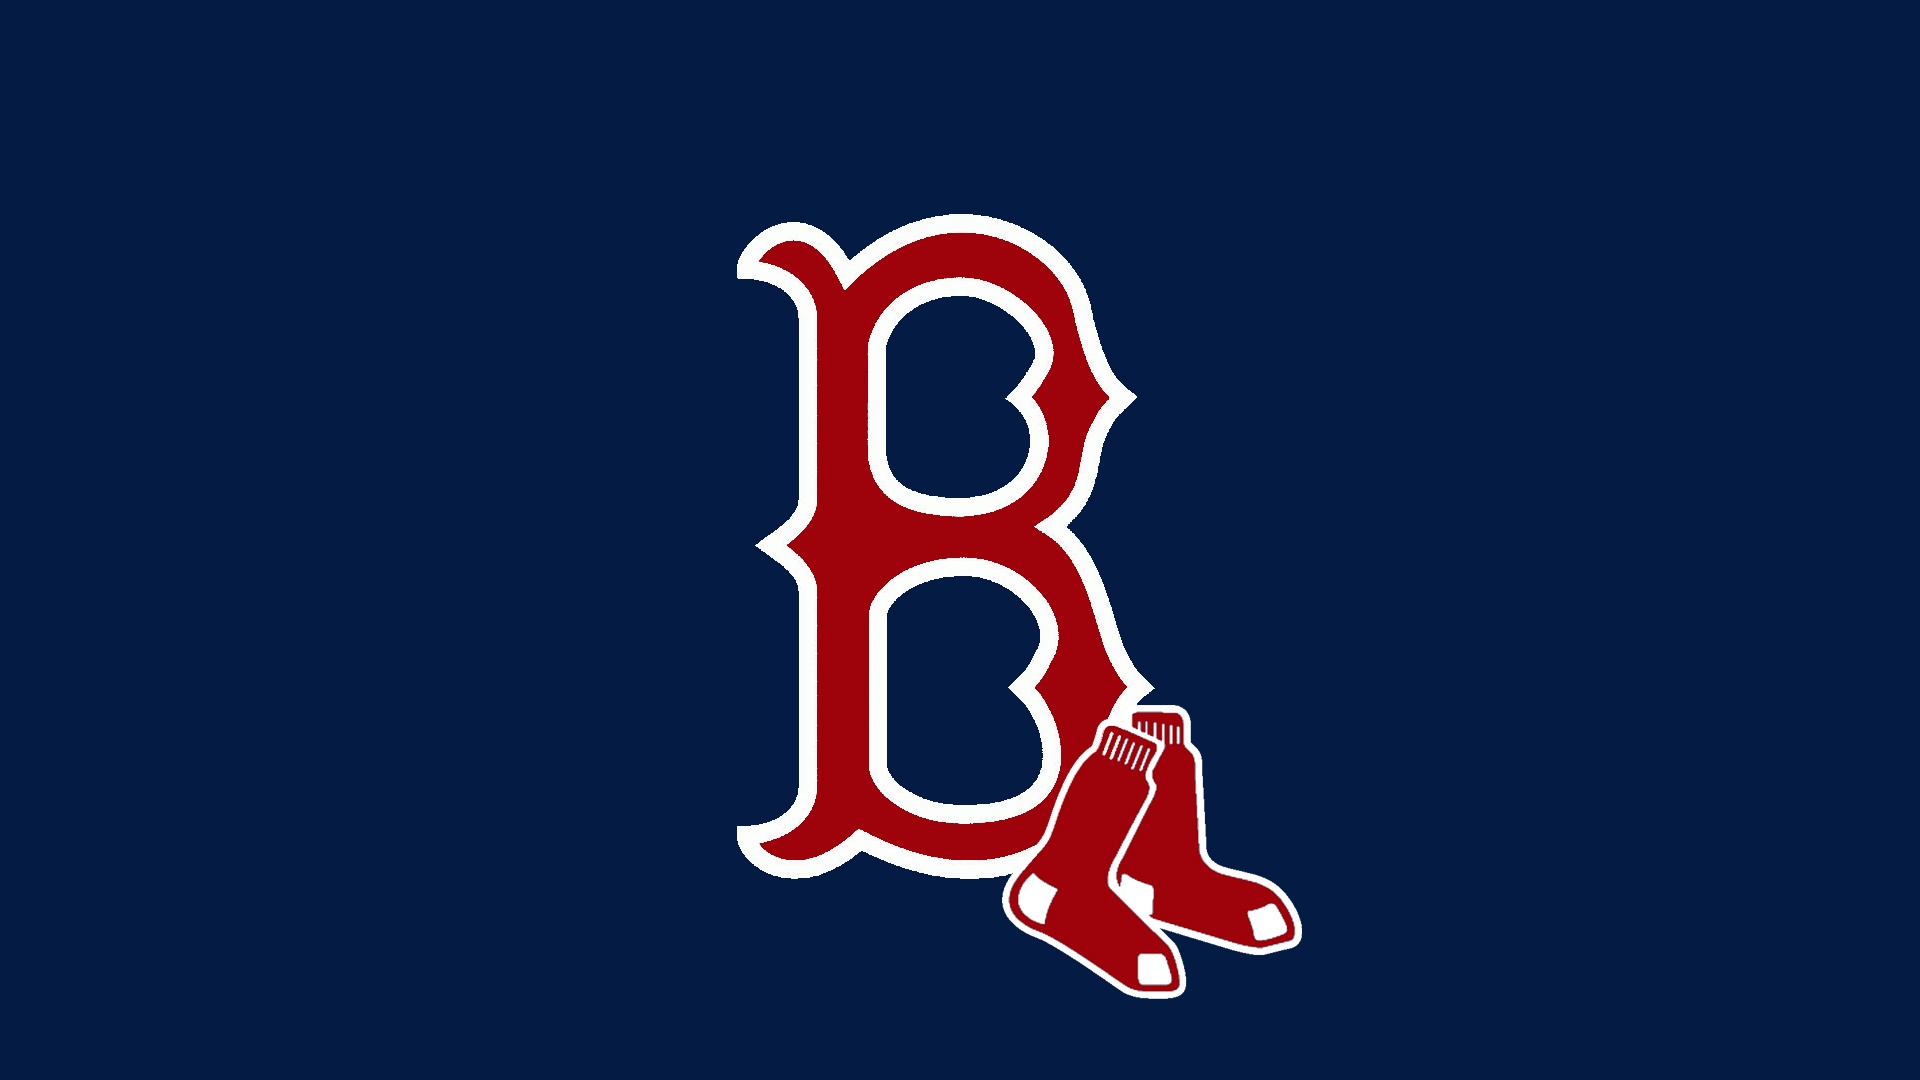 Free Boston Red Sox Logo Wallpaper Download Free Clip Art Free Clip Art On Clipart Library